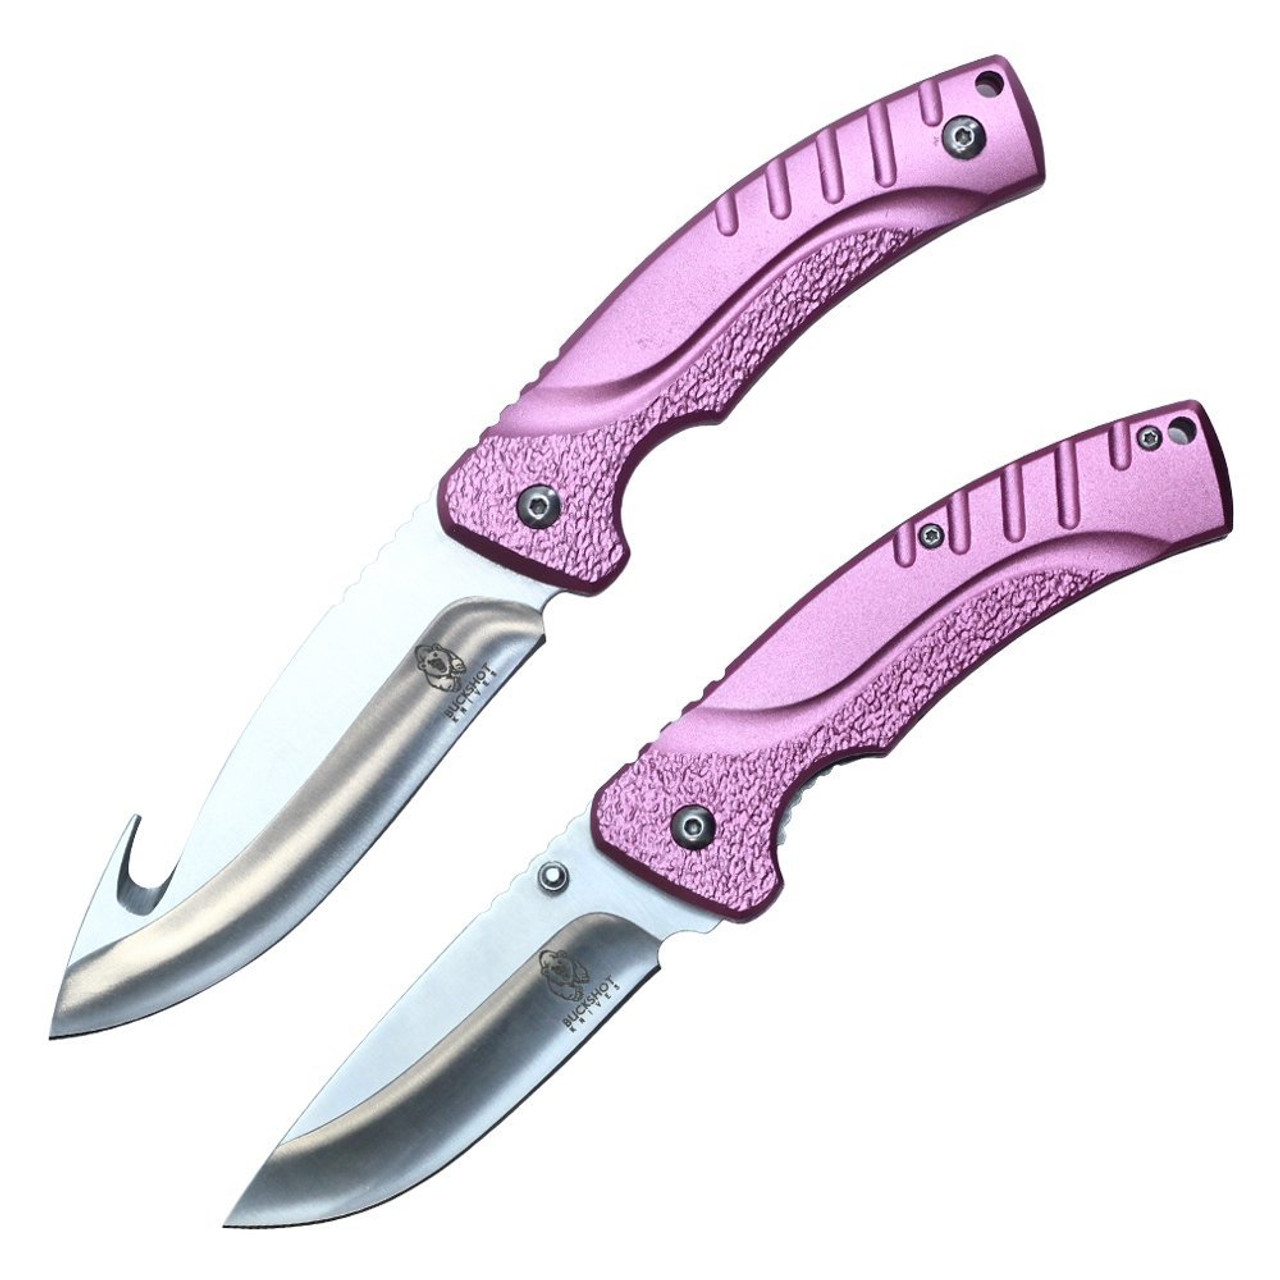 Buckshot Knives Full tang camping hunting knife & pocket knife set - HBK10PK